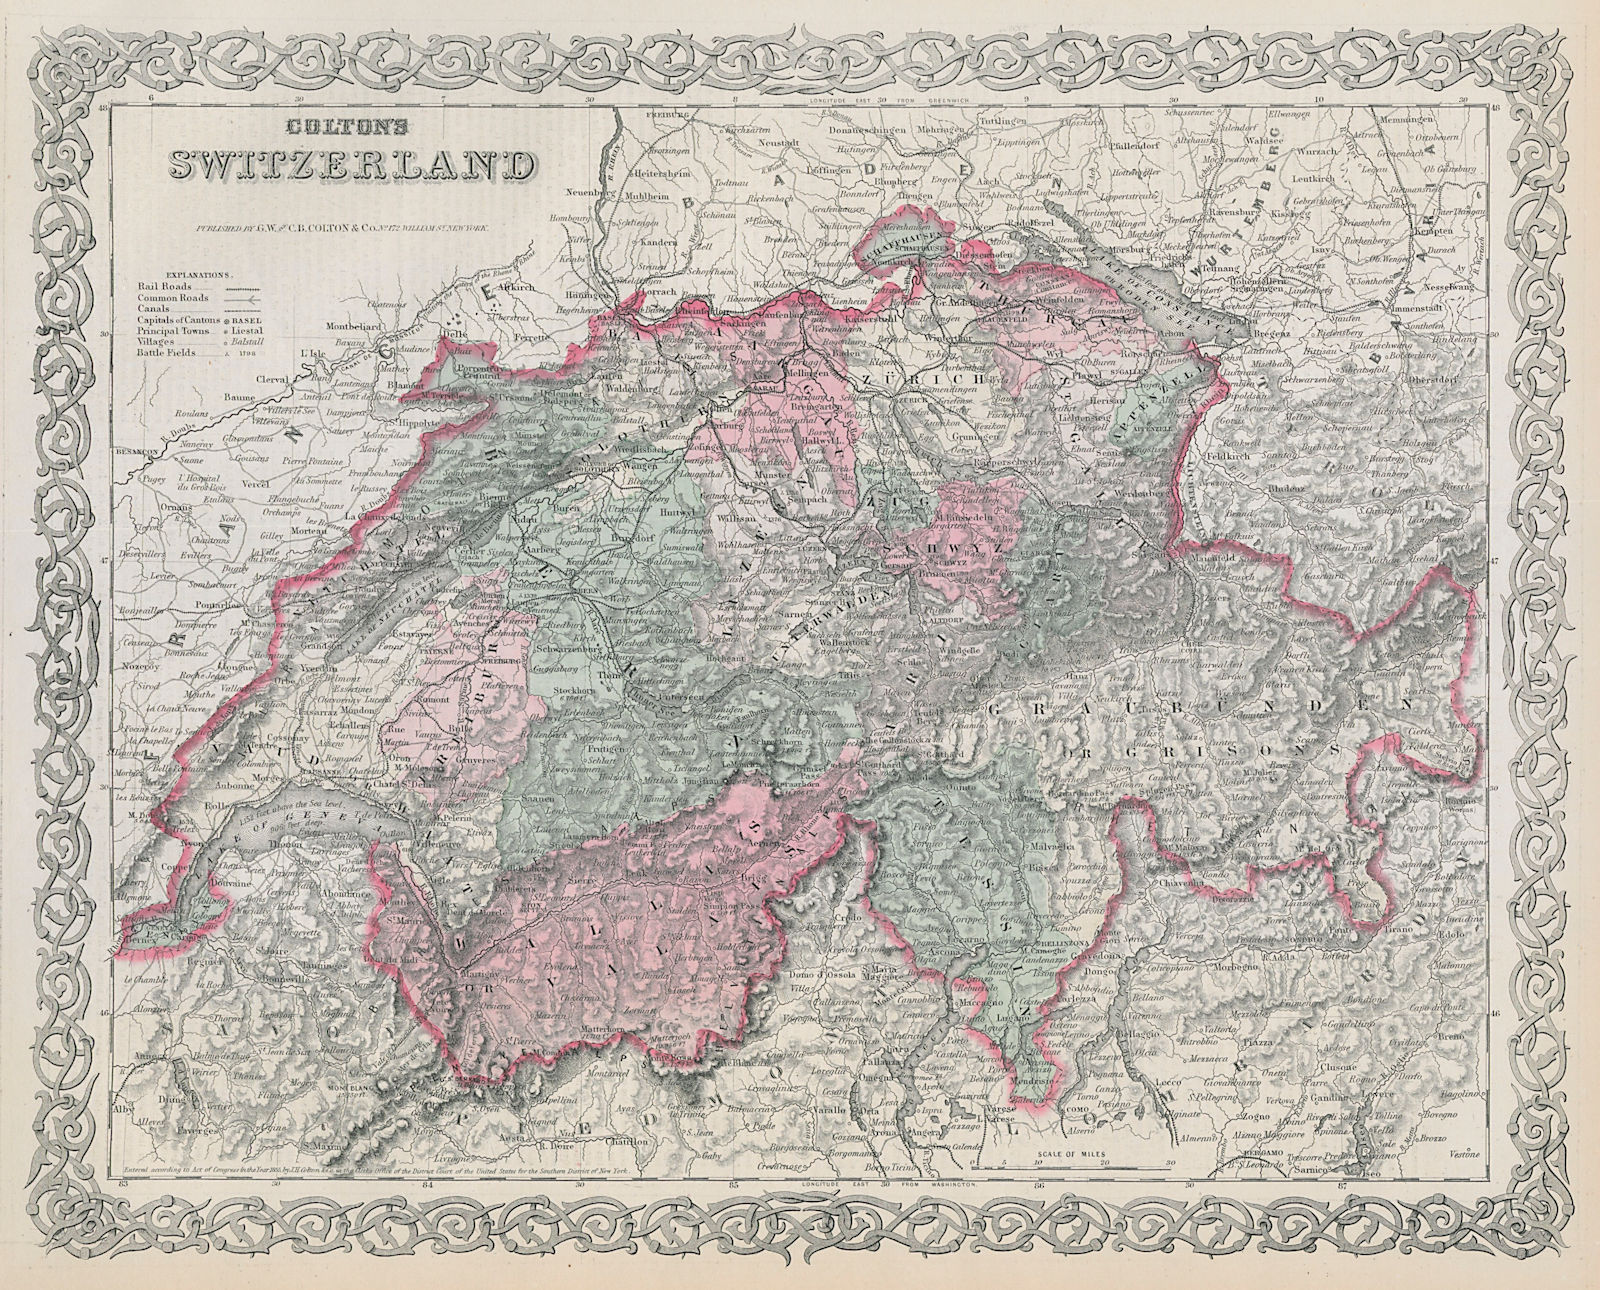 Associate Product Colton's Switzerland in Cantons. Suisse Schweiz. Decorative antique map 1869